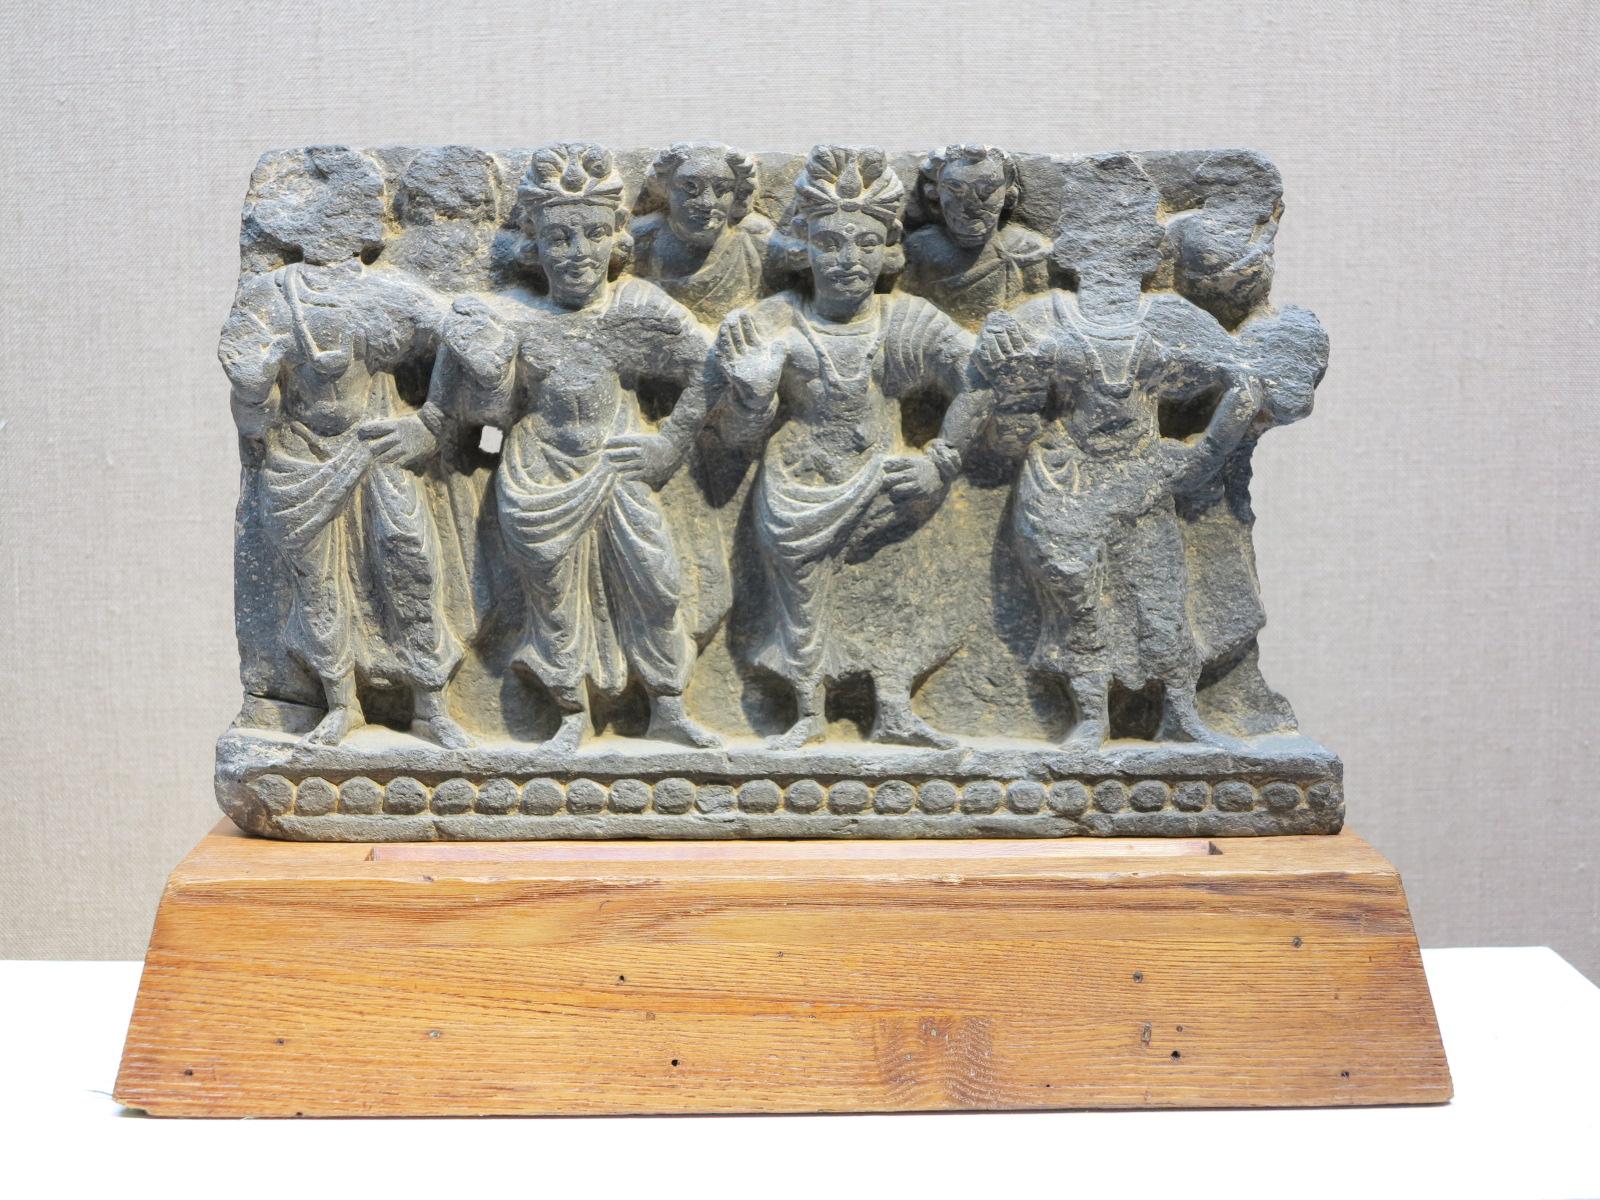 Unknown Figurative Sculpture - 2nd-century Gandharan Attendants of The Buddha relief sculpture